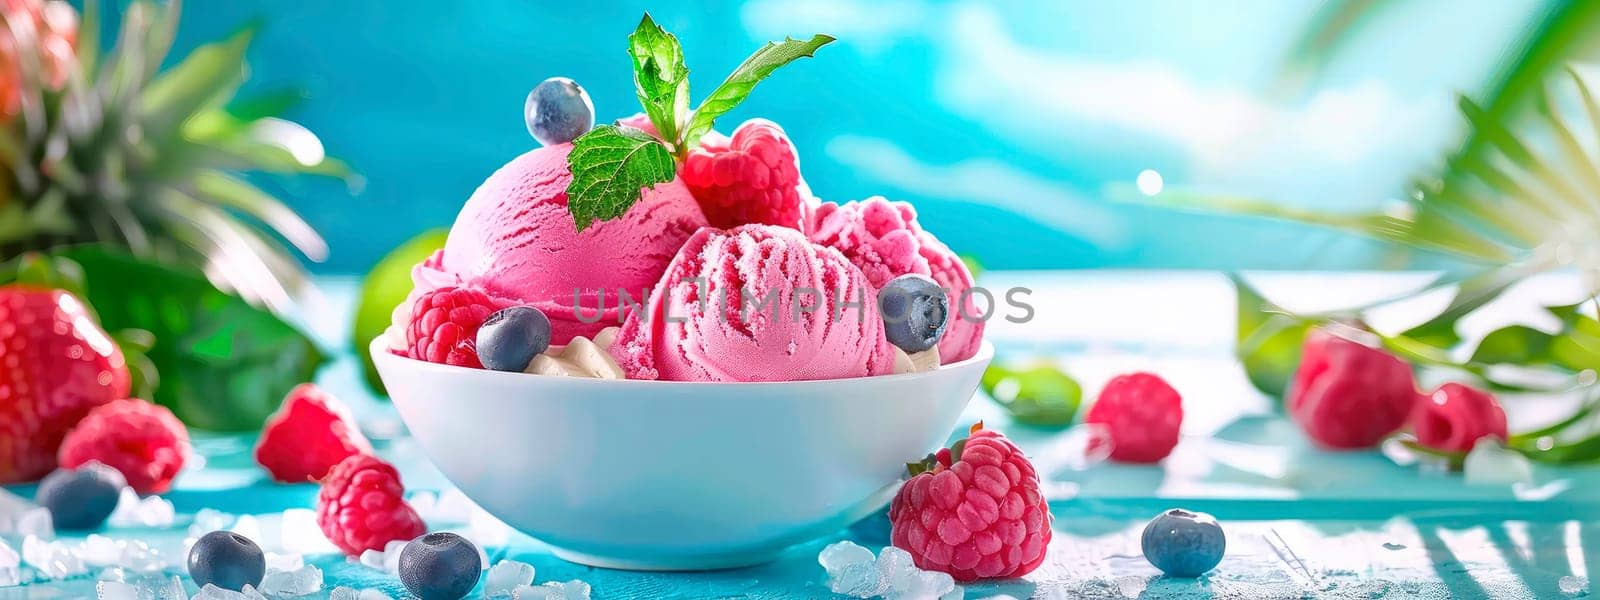 ice cream balls berries and fruits. selective focus. by yanadjana